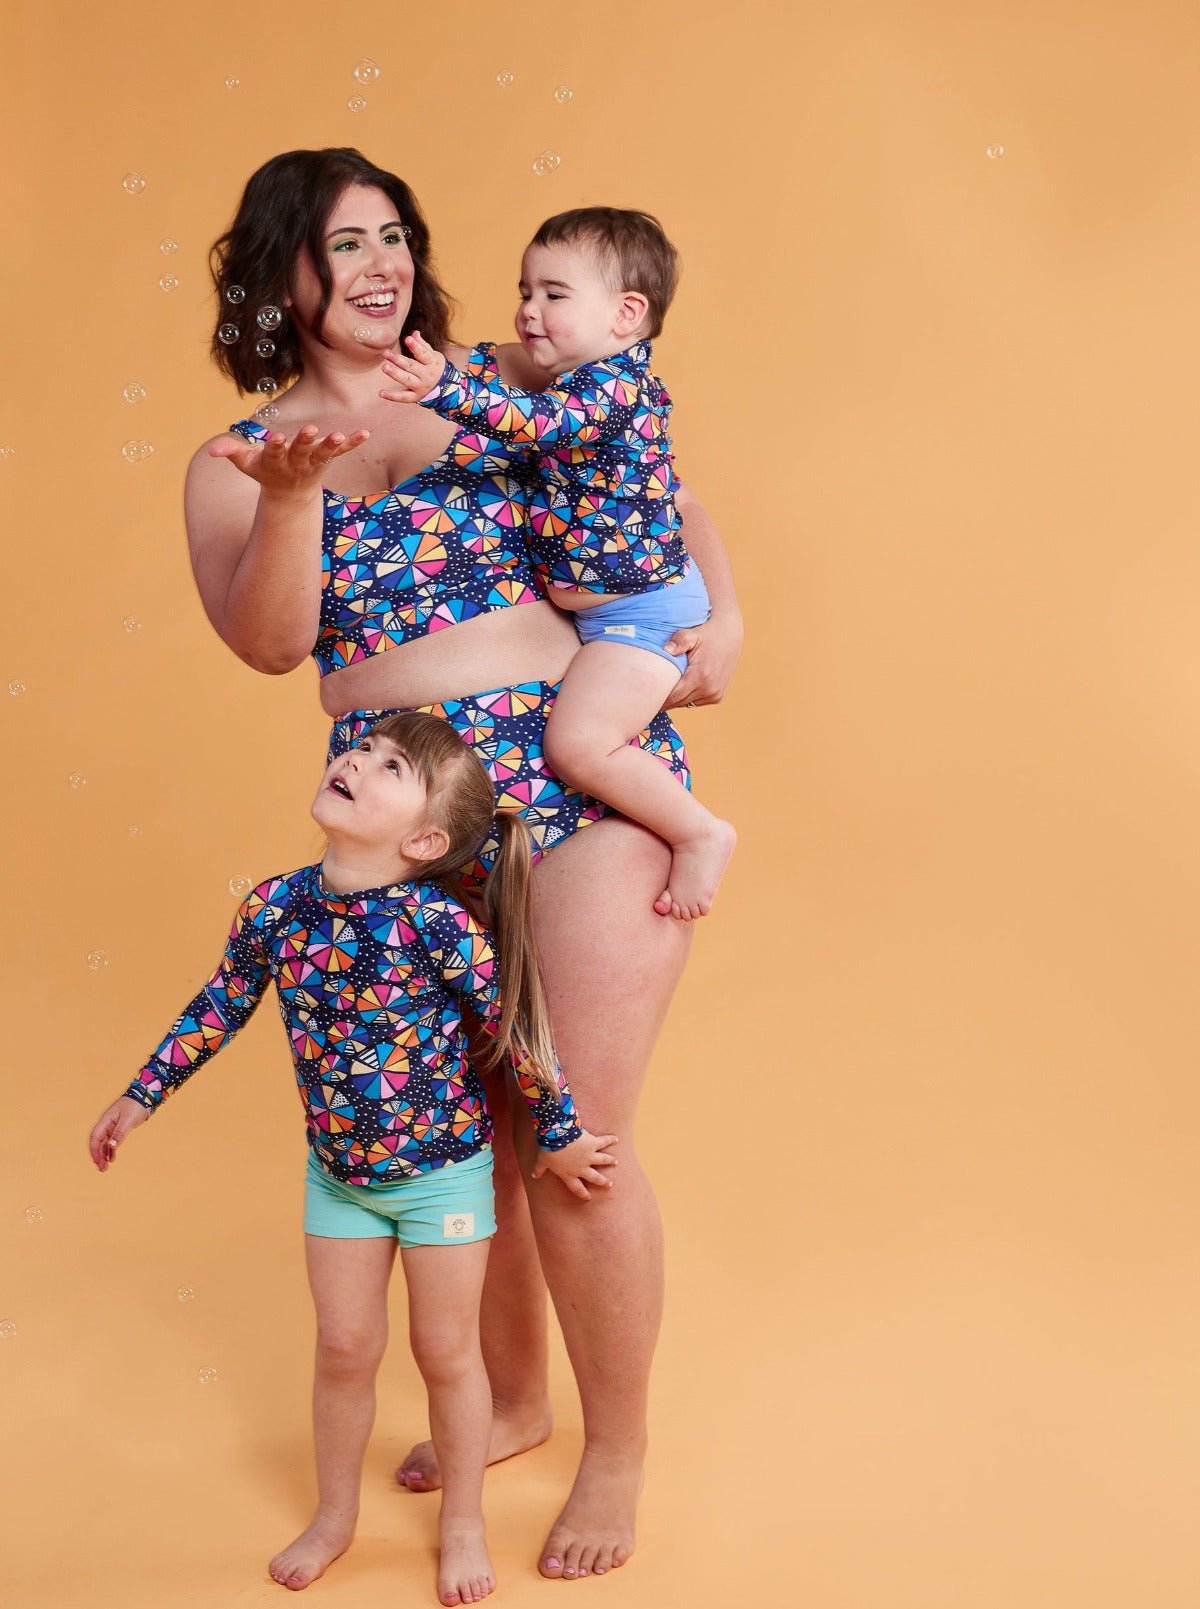 Colour Wheel Kids Long-Sleeved Rashie Top - matching family swimwear